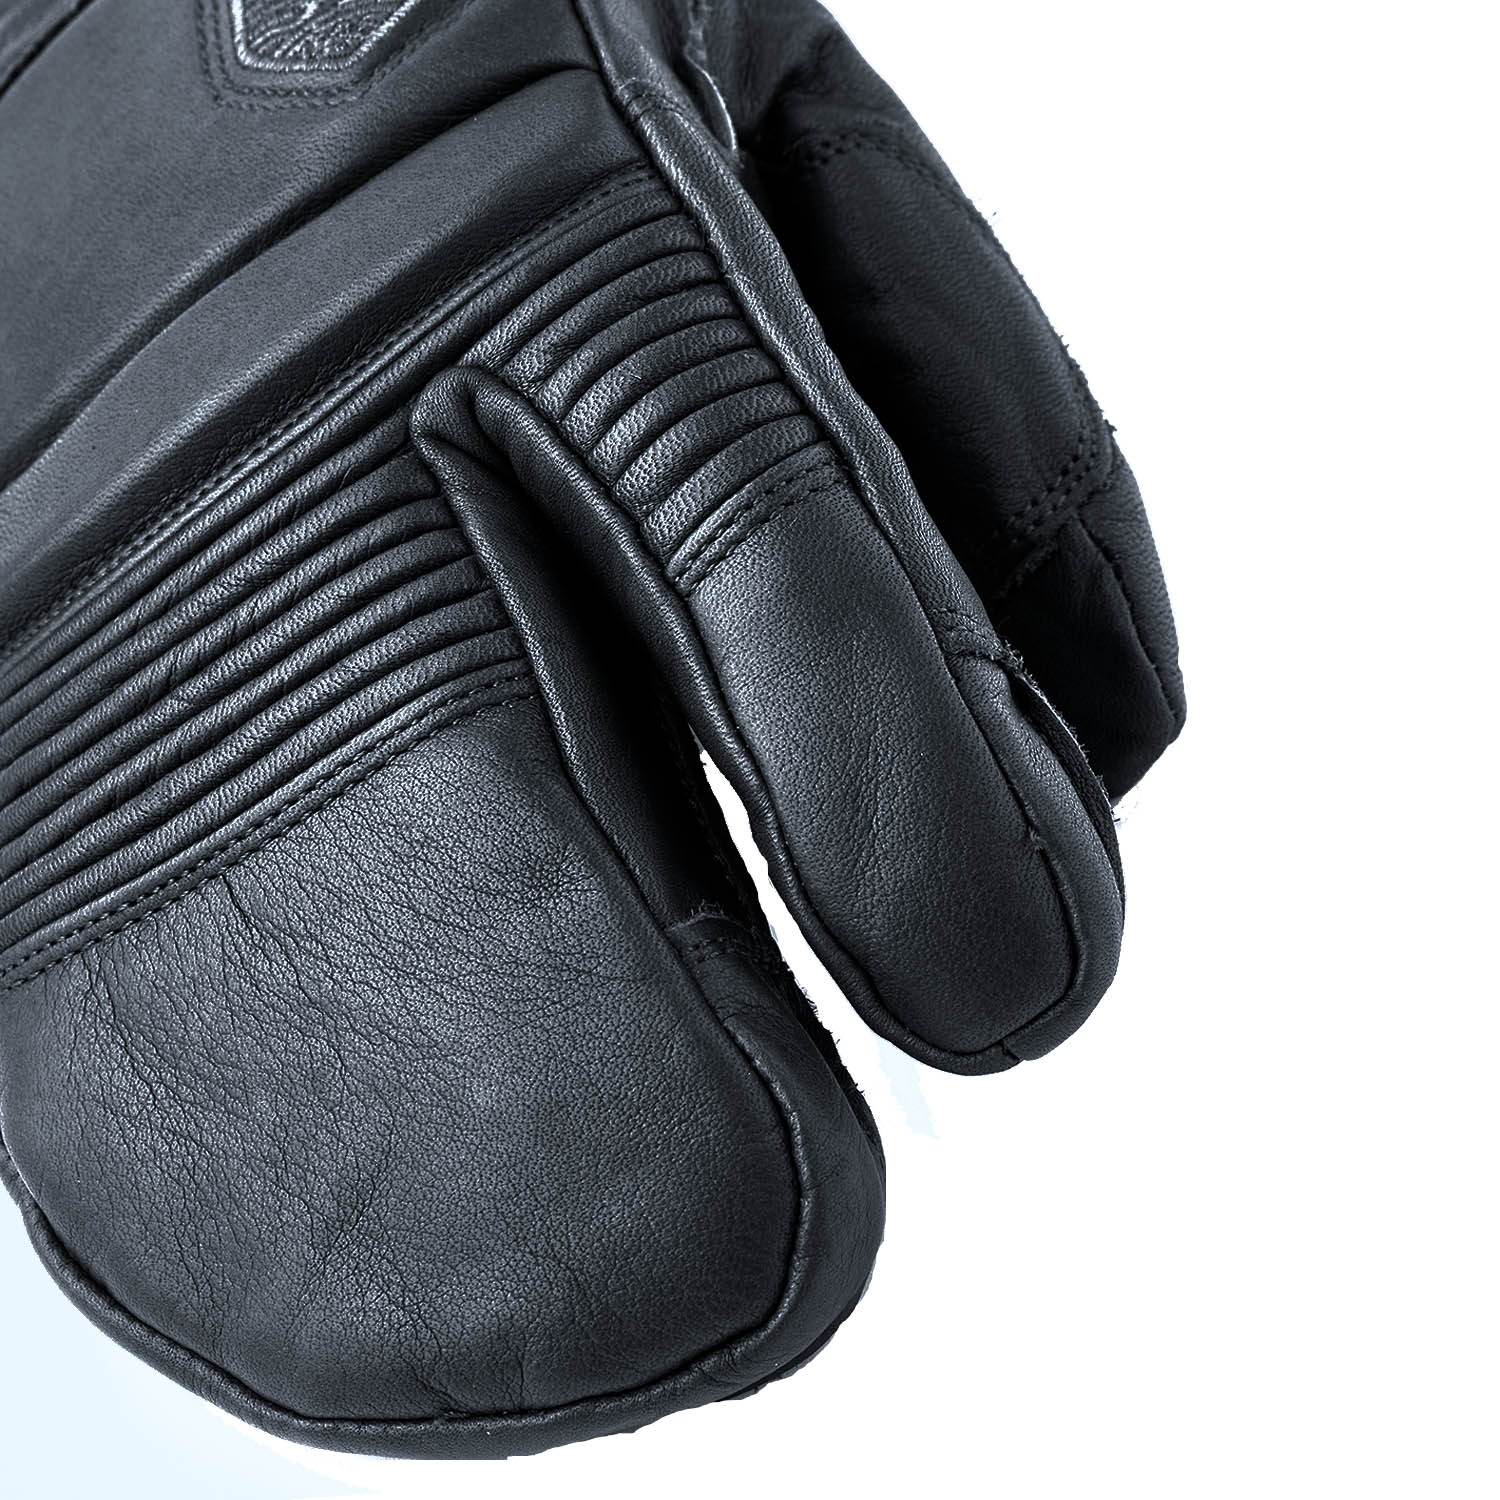 Hestra Leather Fall Line 3-Finger Gloves Grey 2021